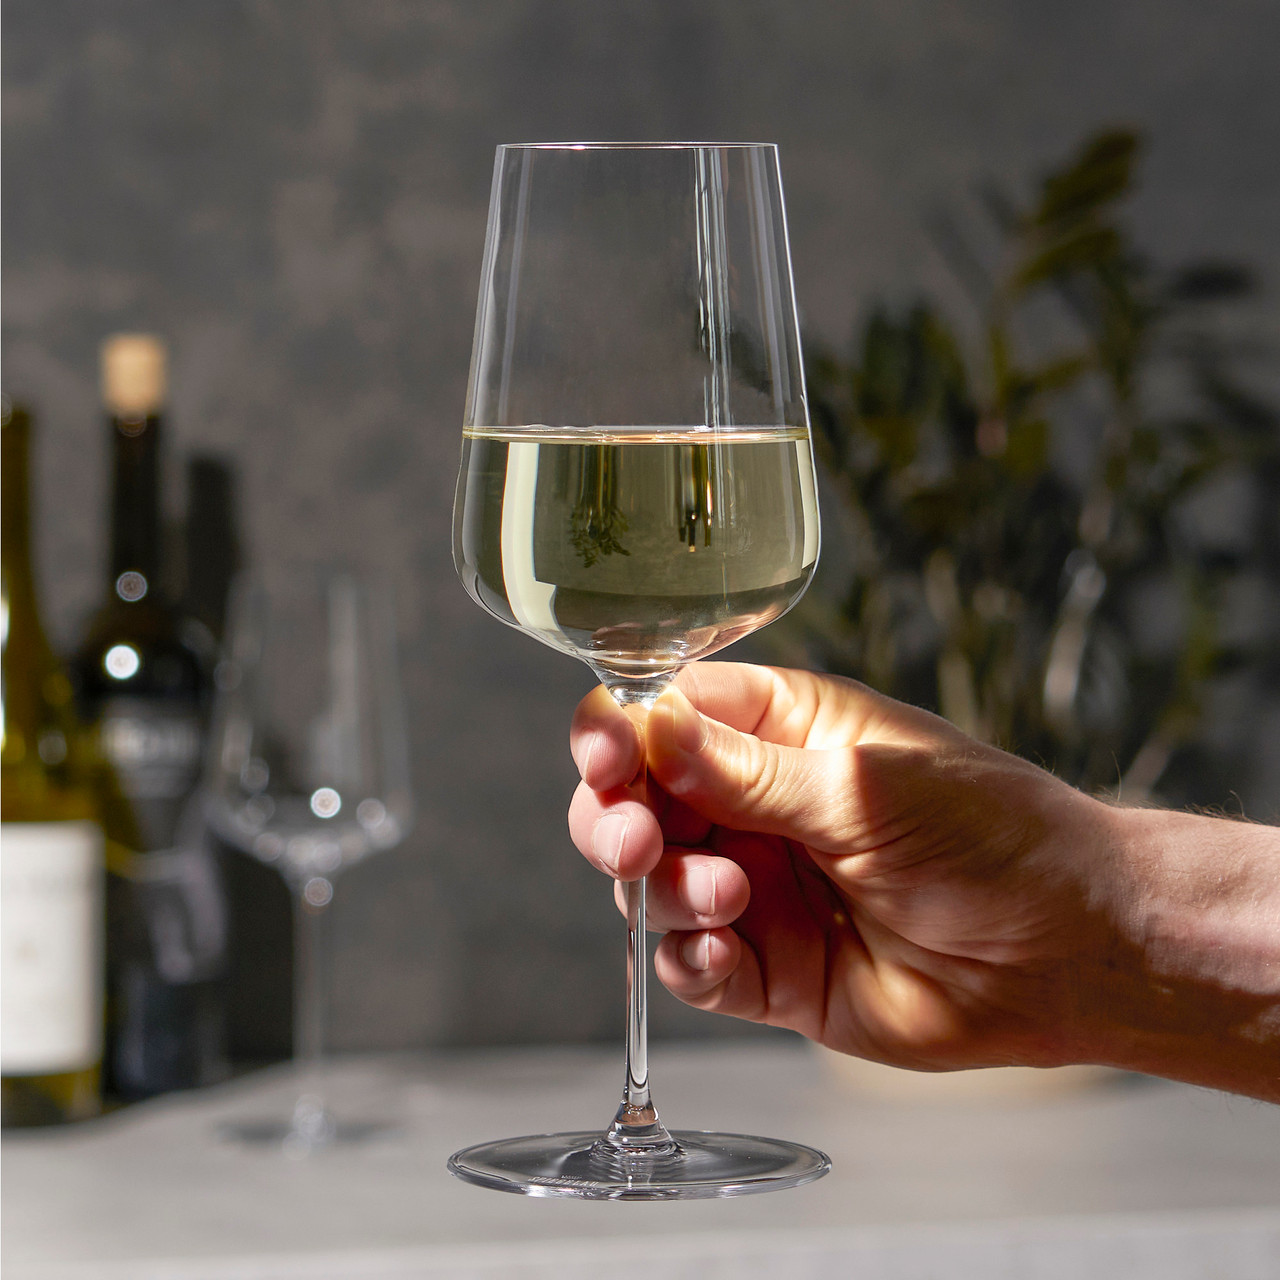 Spiegelau Definition 15.2 oz White Wine Glass (set of 2)